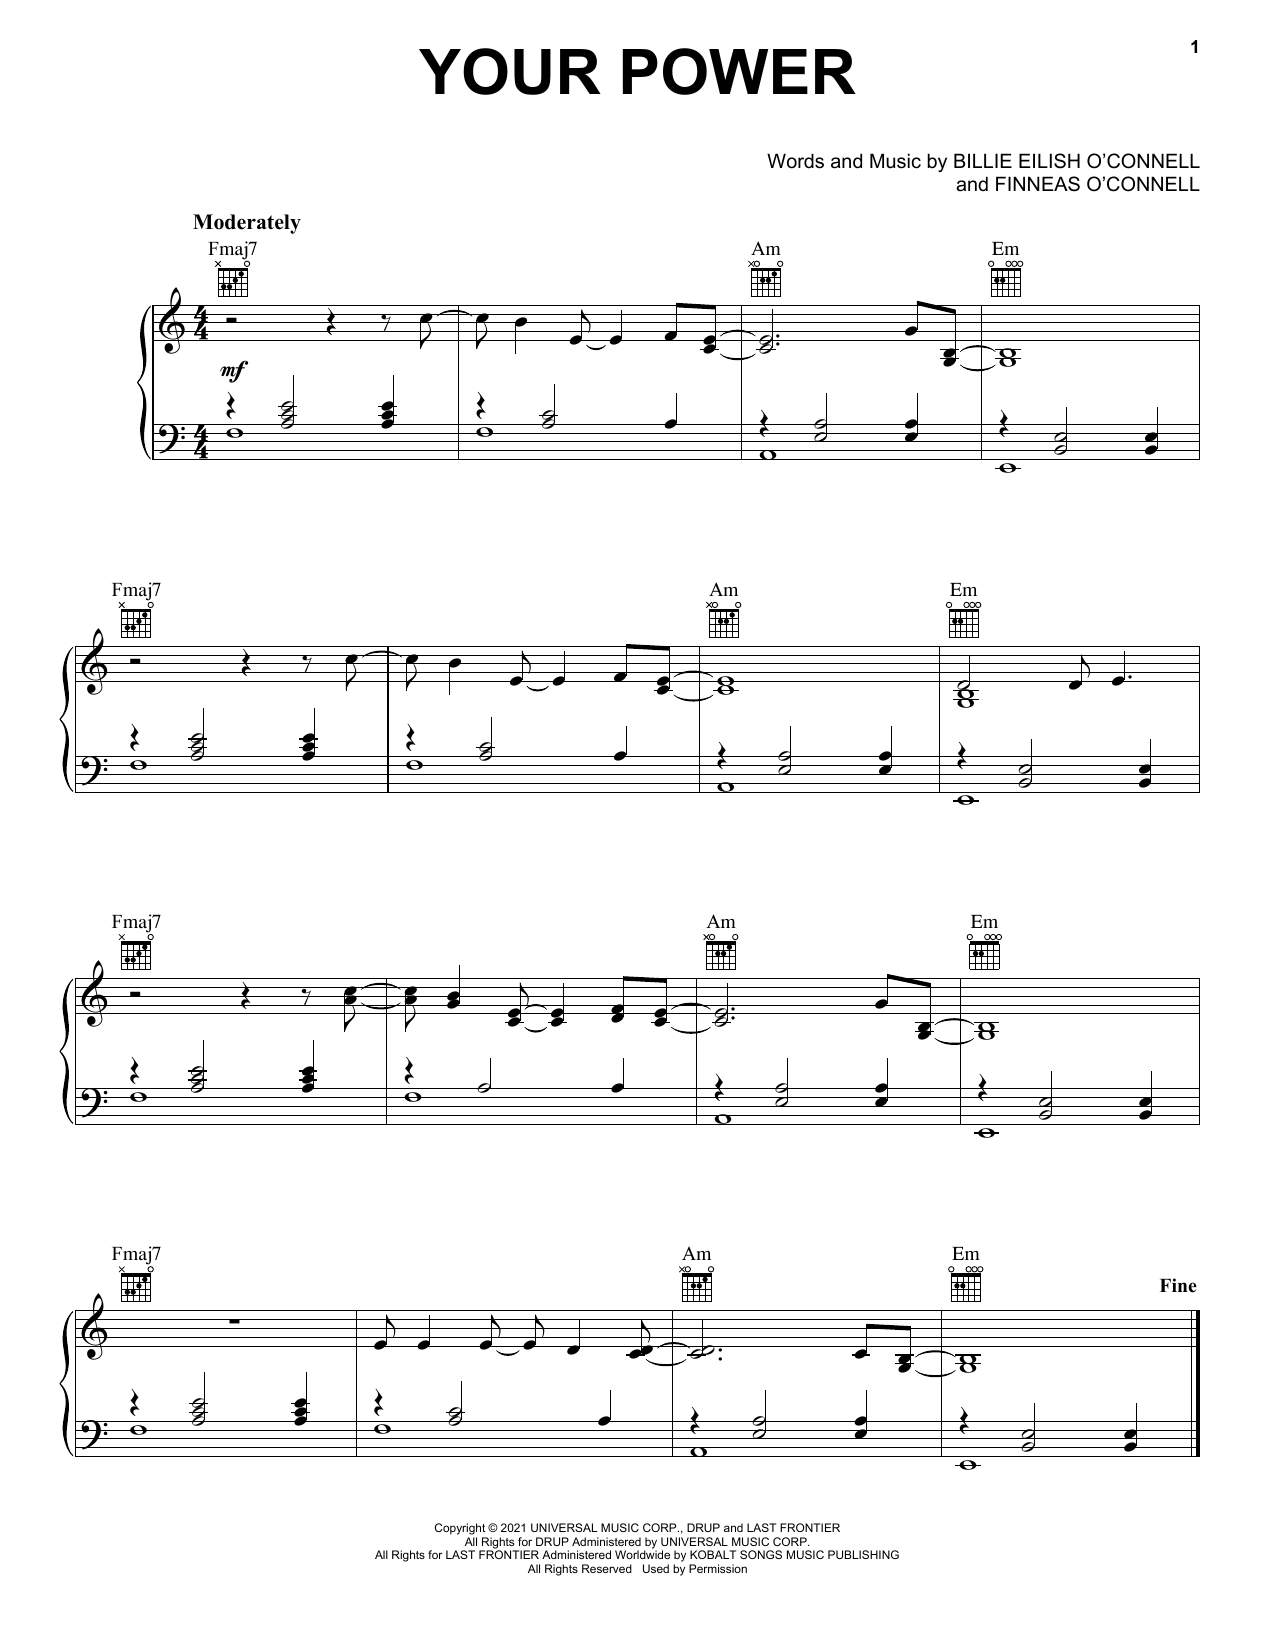 Billie Eilish Your Power Sheet Music Notes & Chords for Guitar Chords/Lyrics - Download or Print PDF